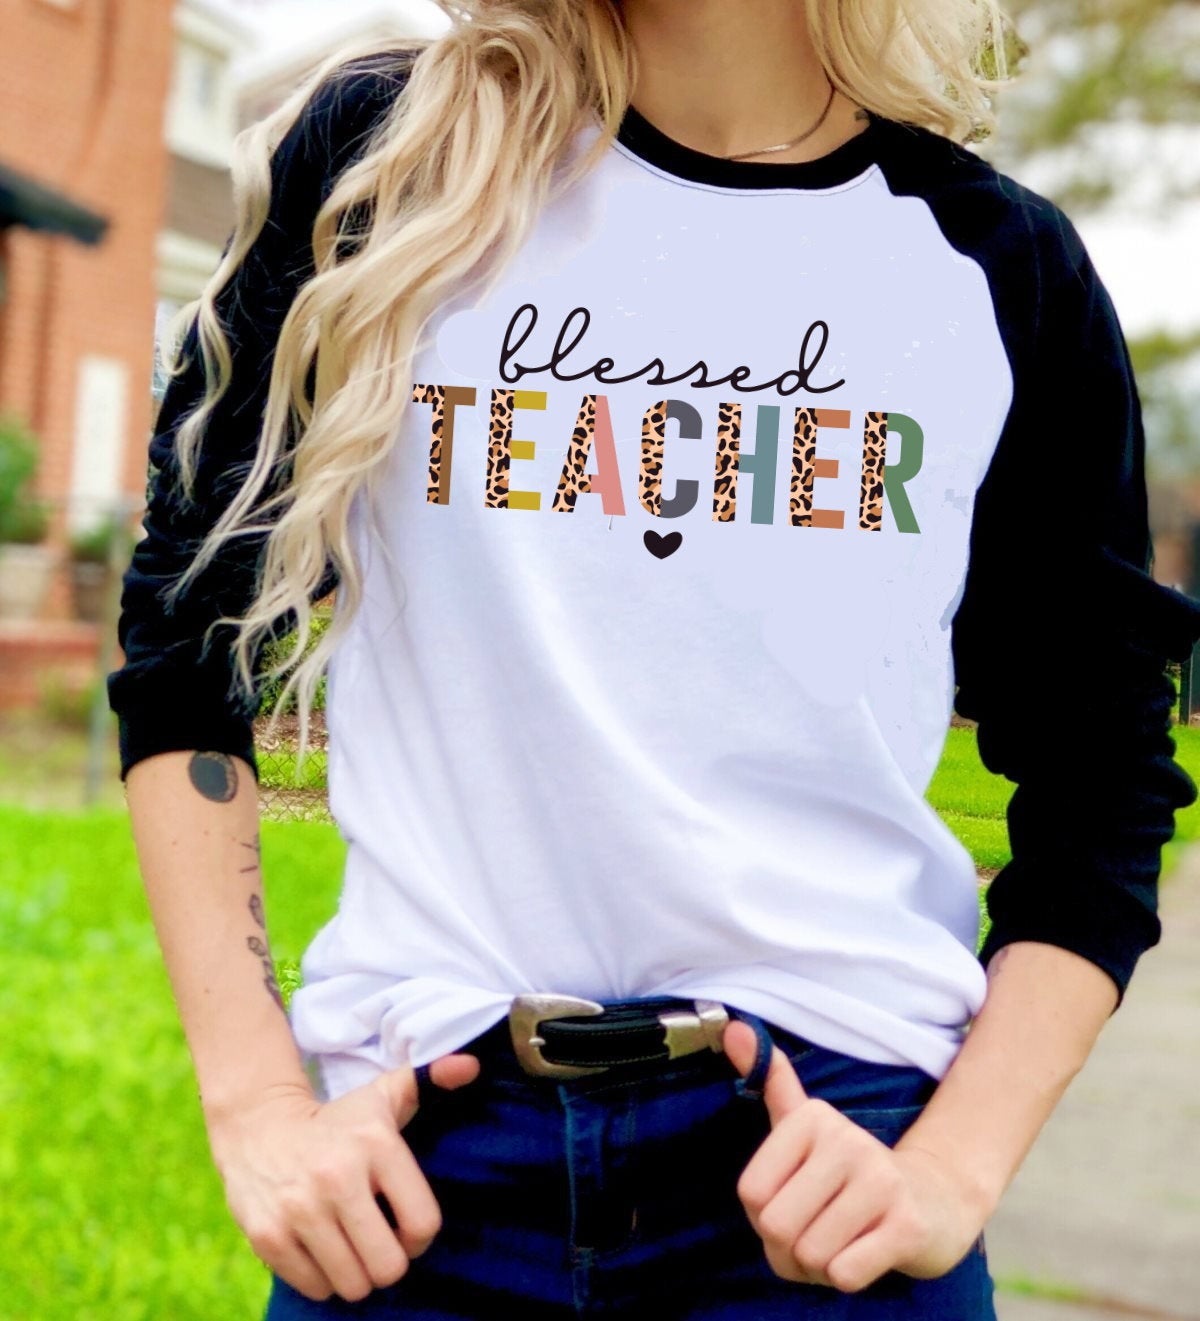 Blessed Teacher, Back To School Christian Shirt, Bible Shirt, Jesus Love, Leopard Print shirt Novelty Graphic Tee T-Shirt Raglan